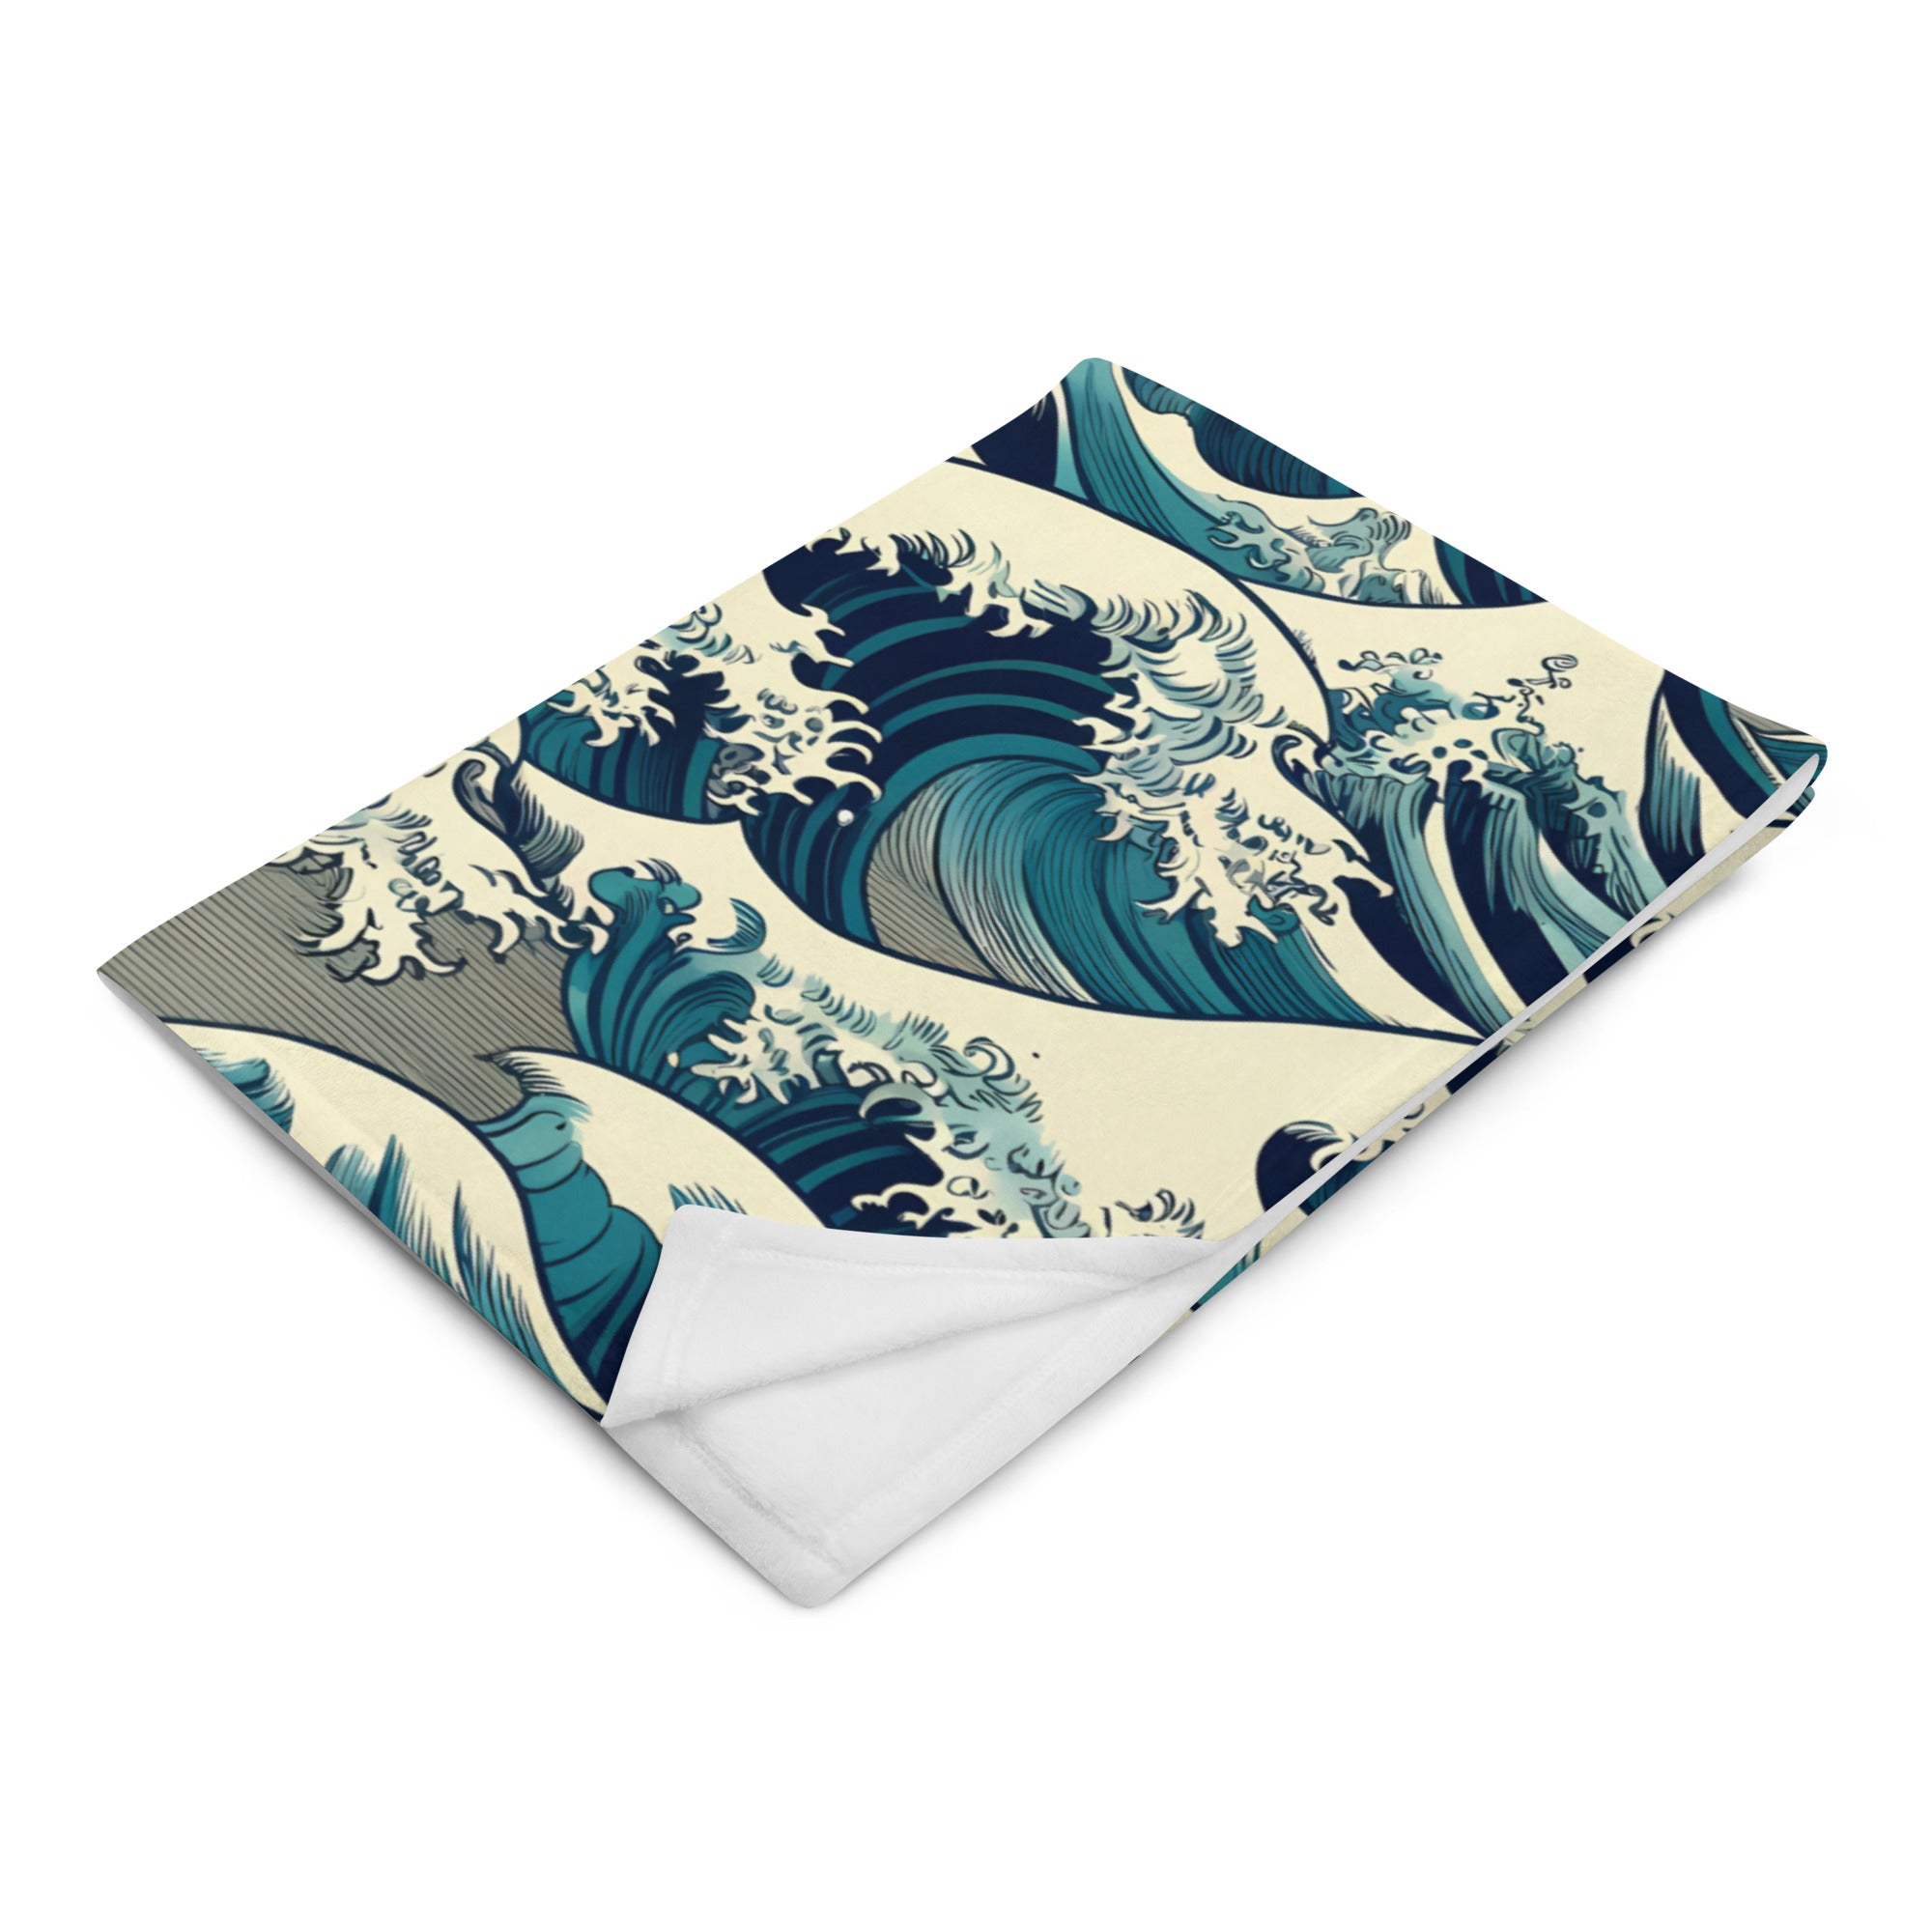 Hokusai 'The Great Wave off Kanagawa' Famous Painting Throw Blanket | Premium Art Throw